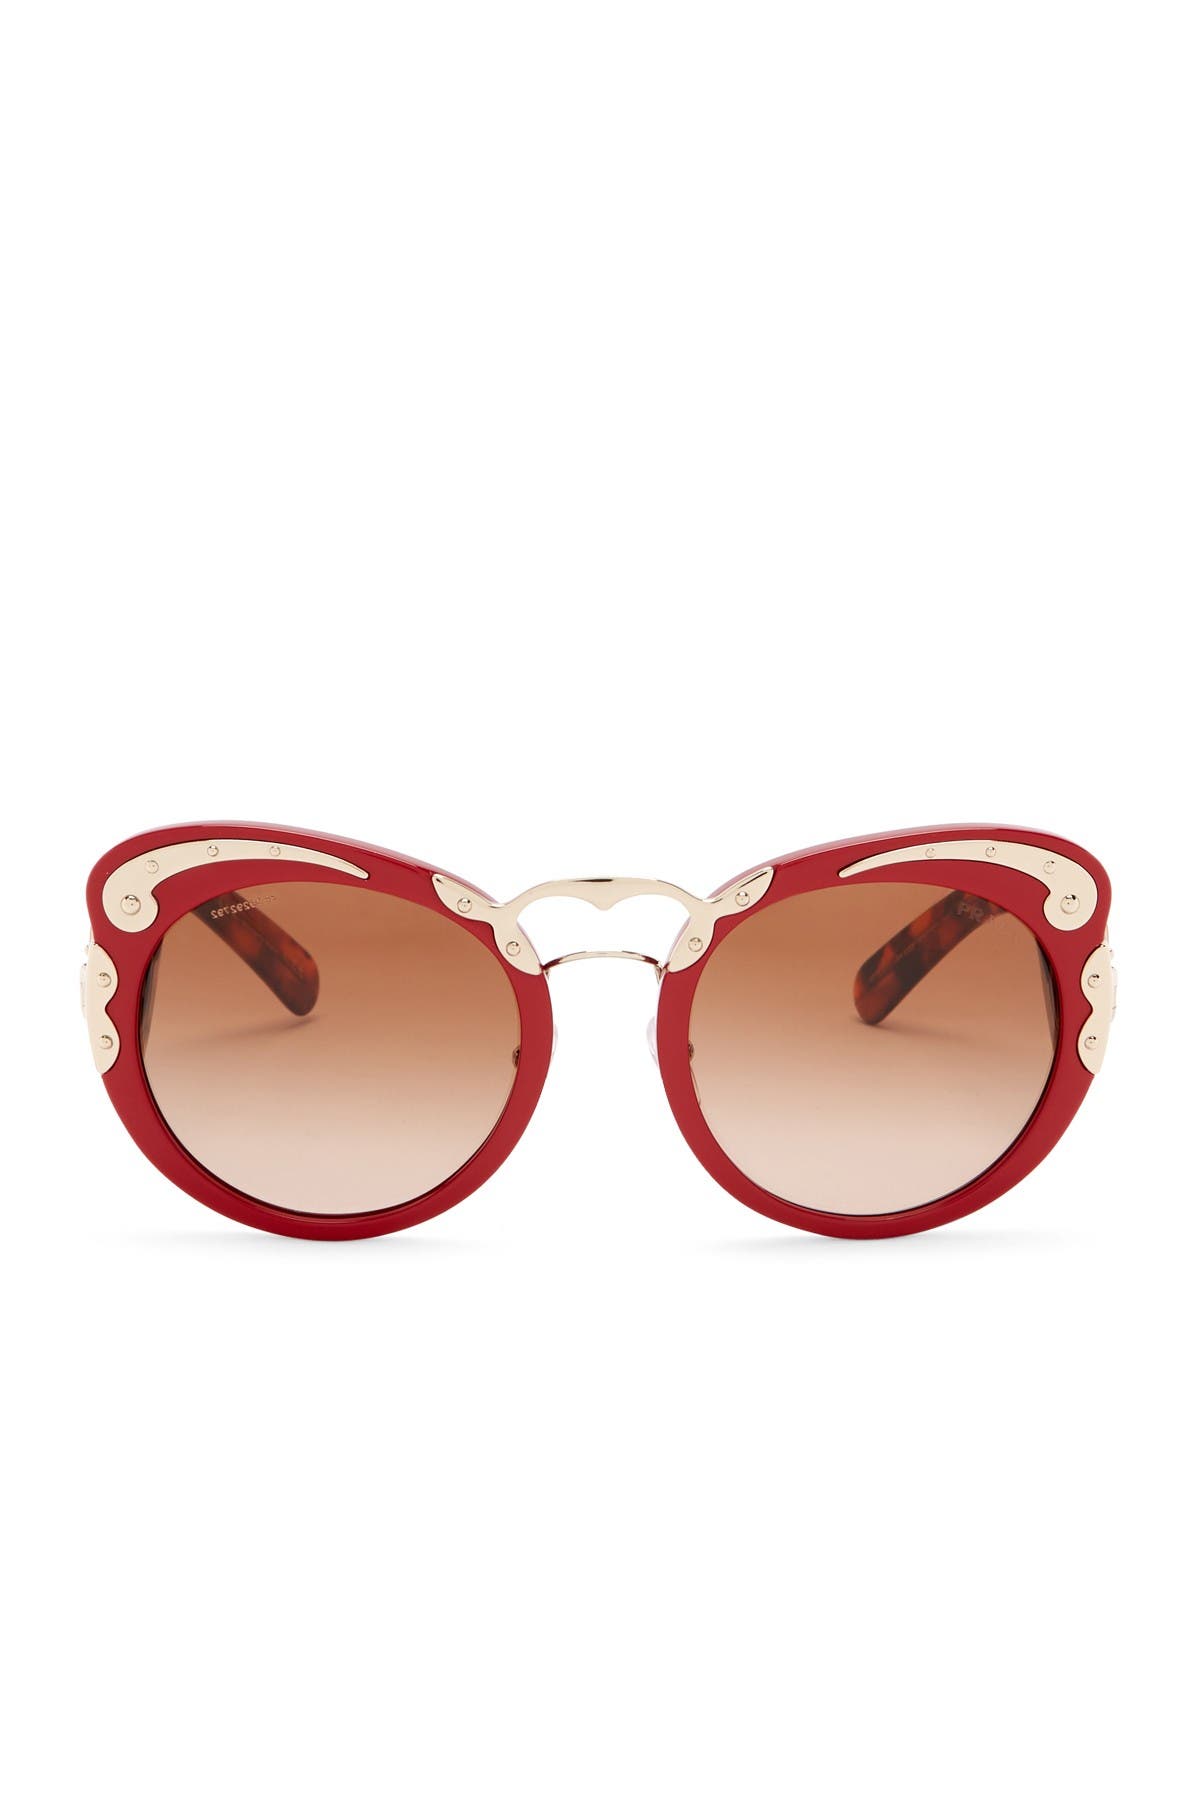 prada baroque sunglasses sale